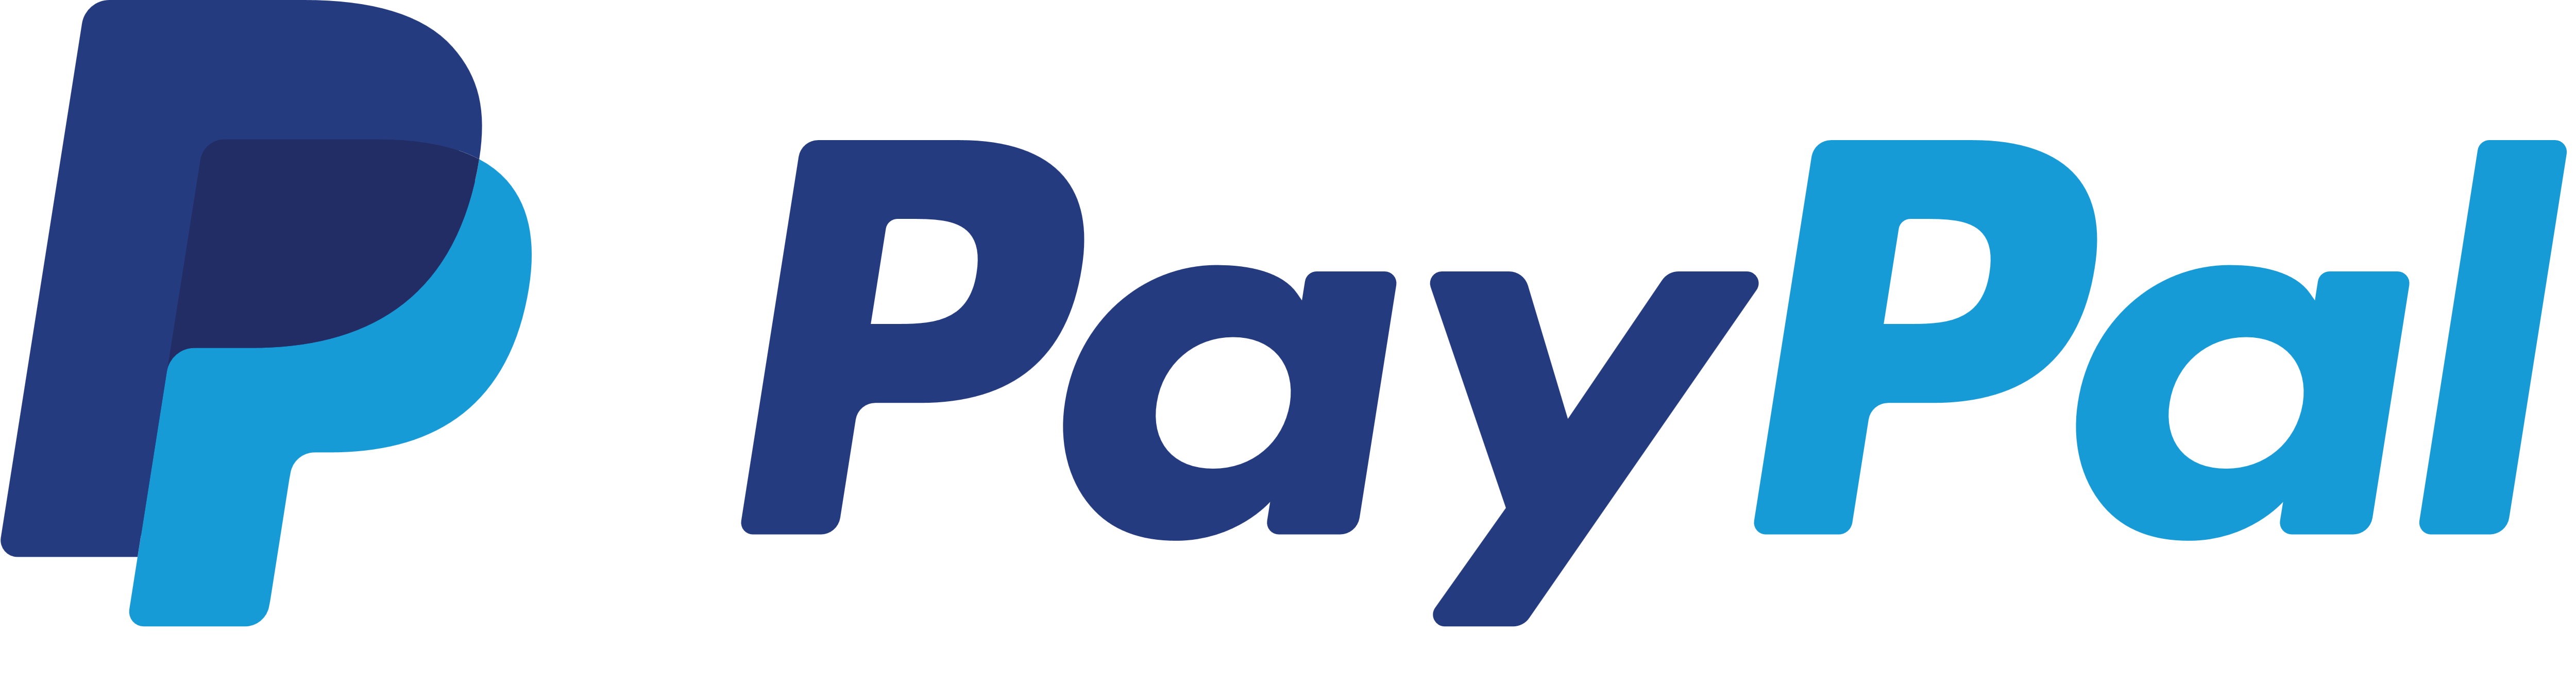 https://www.agedcareguide.com.au/assets/news/articles/PayPal_logo_logotype_emblem.png